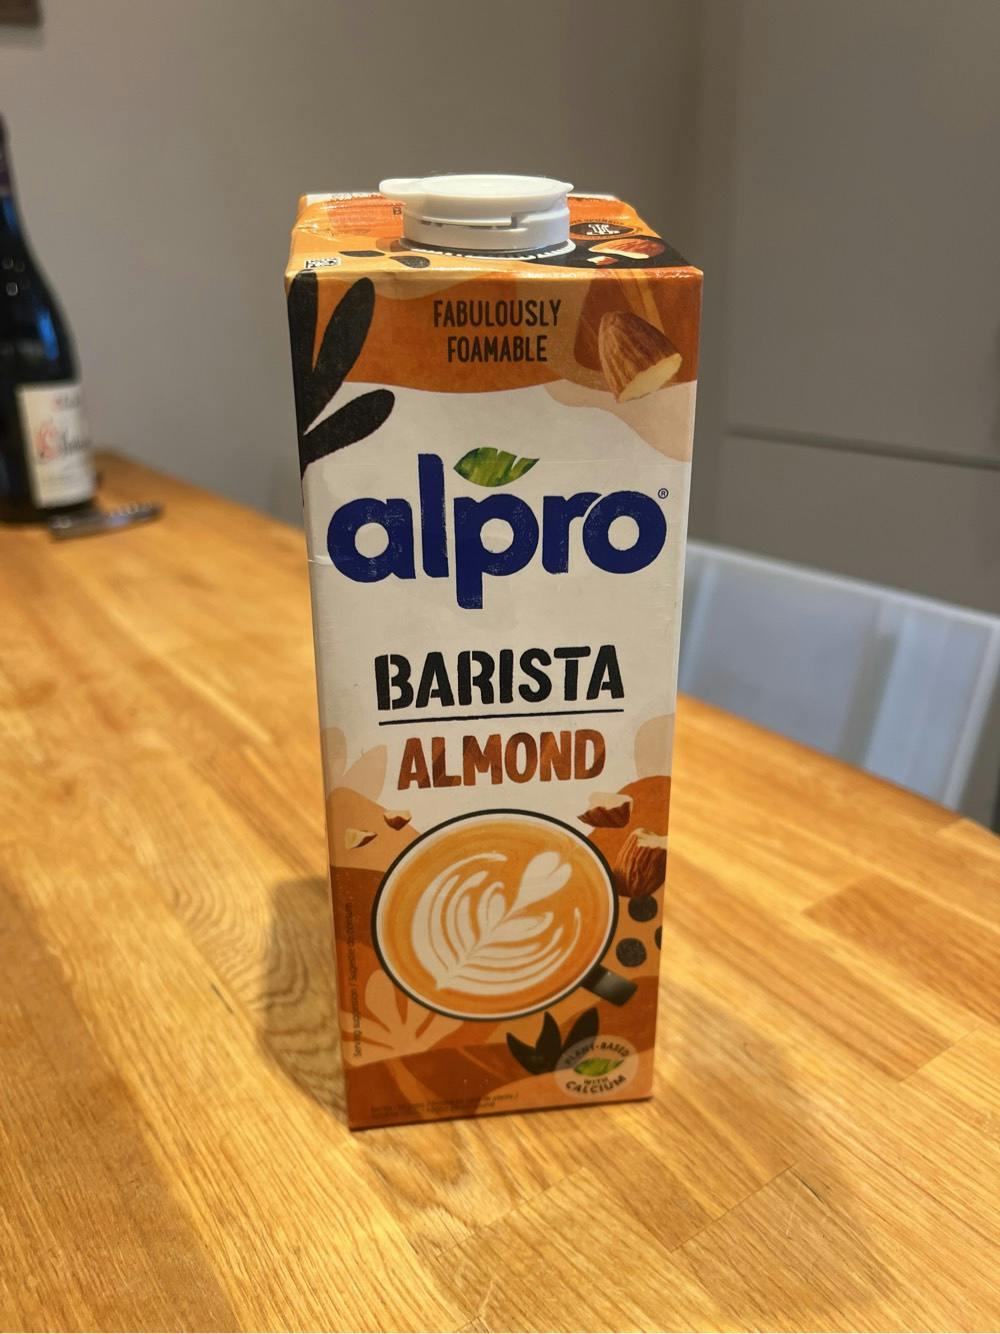 Barista almond, Alpro